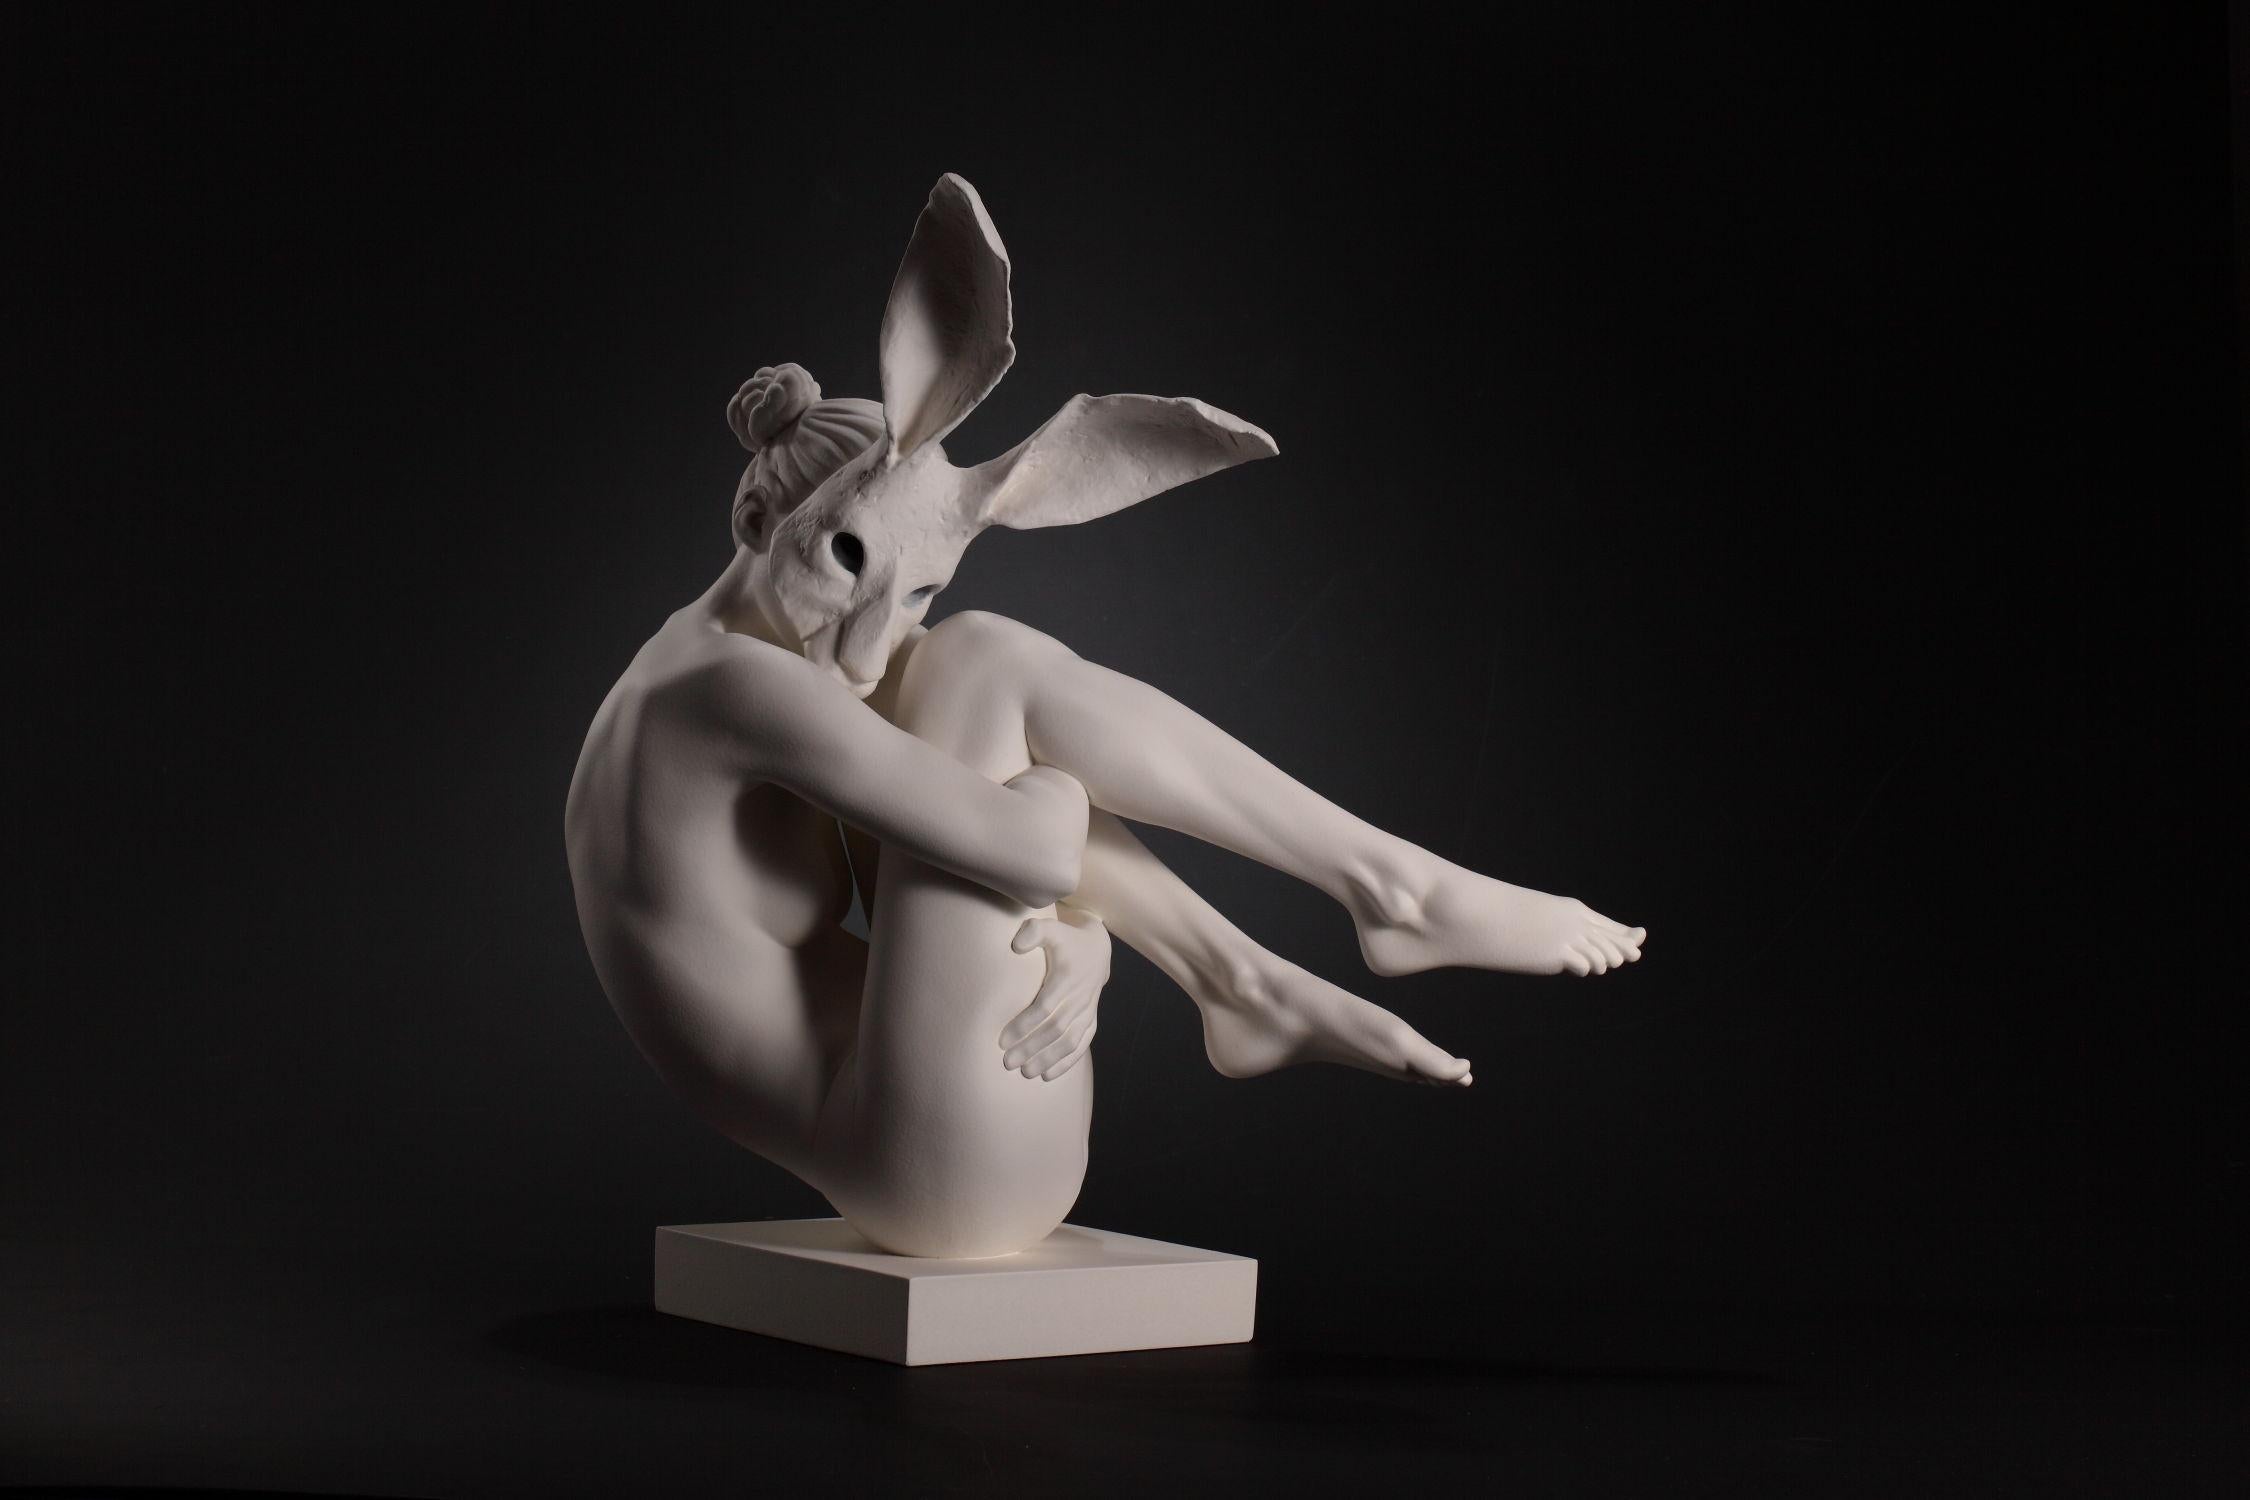 Rachel Ann Stevenson Figurative Sculpture - "Nocturnal Devotion" Contemporary Bronze Nude Sculpture of a Woman 